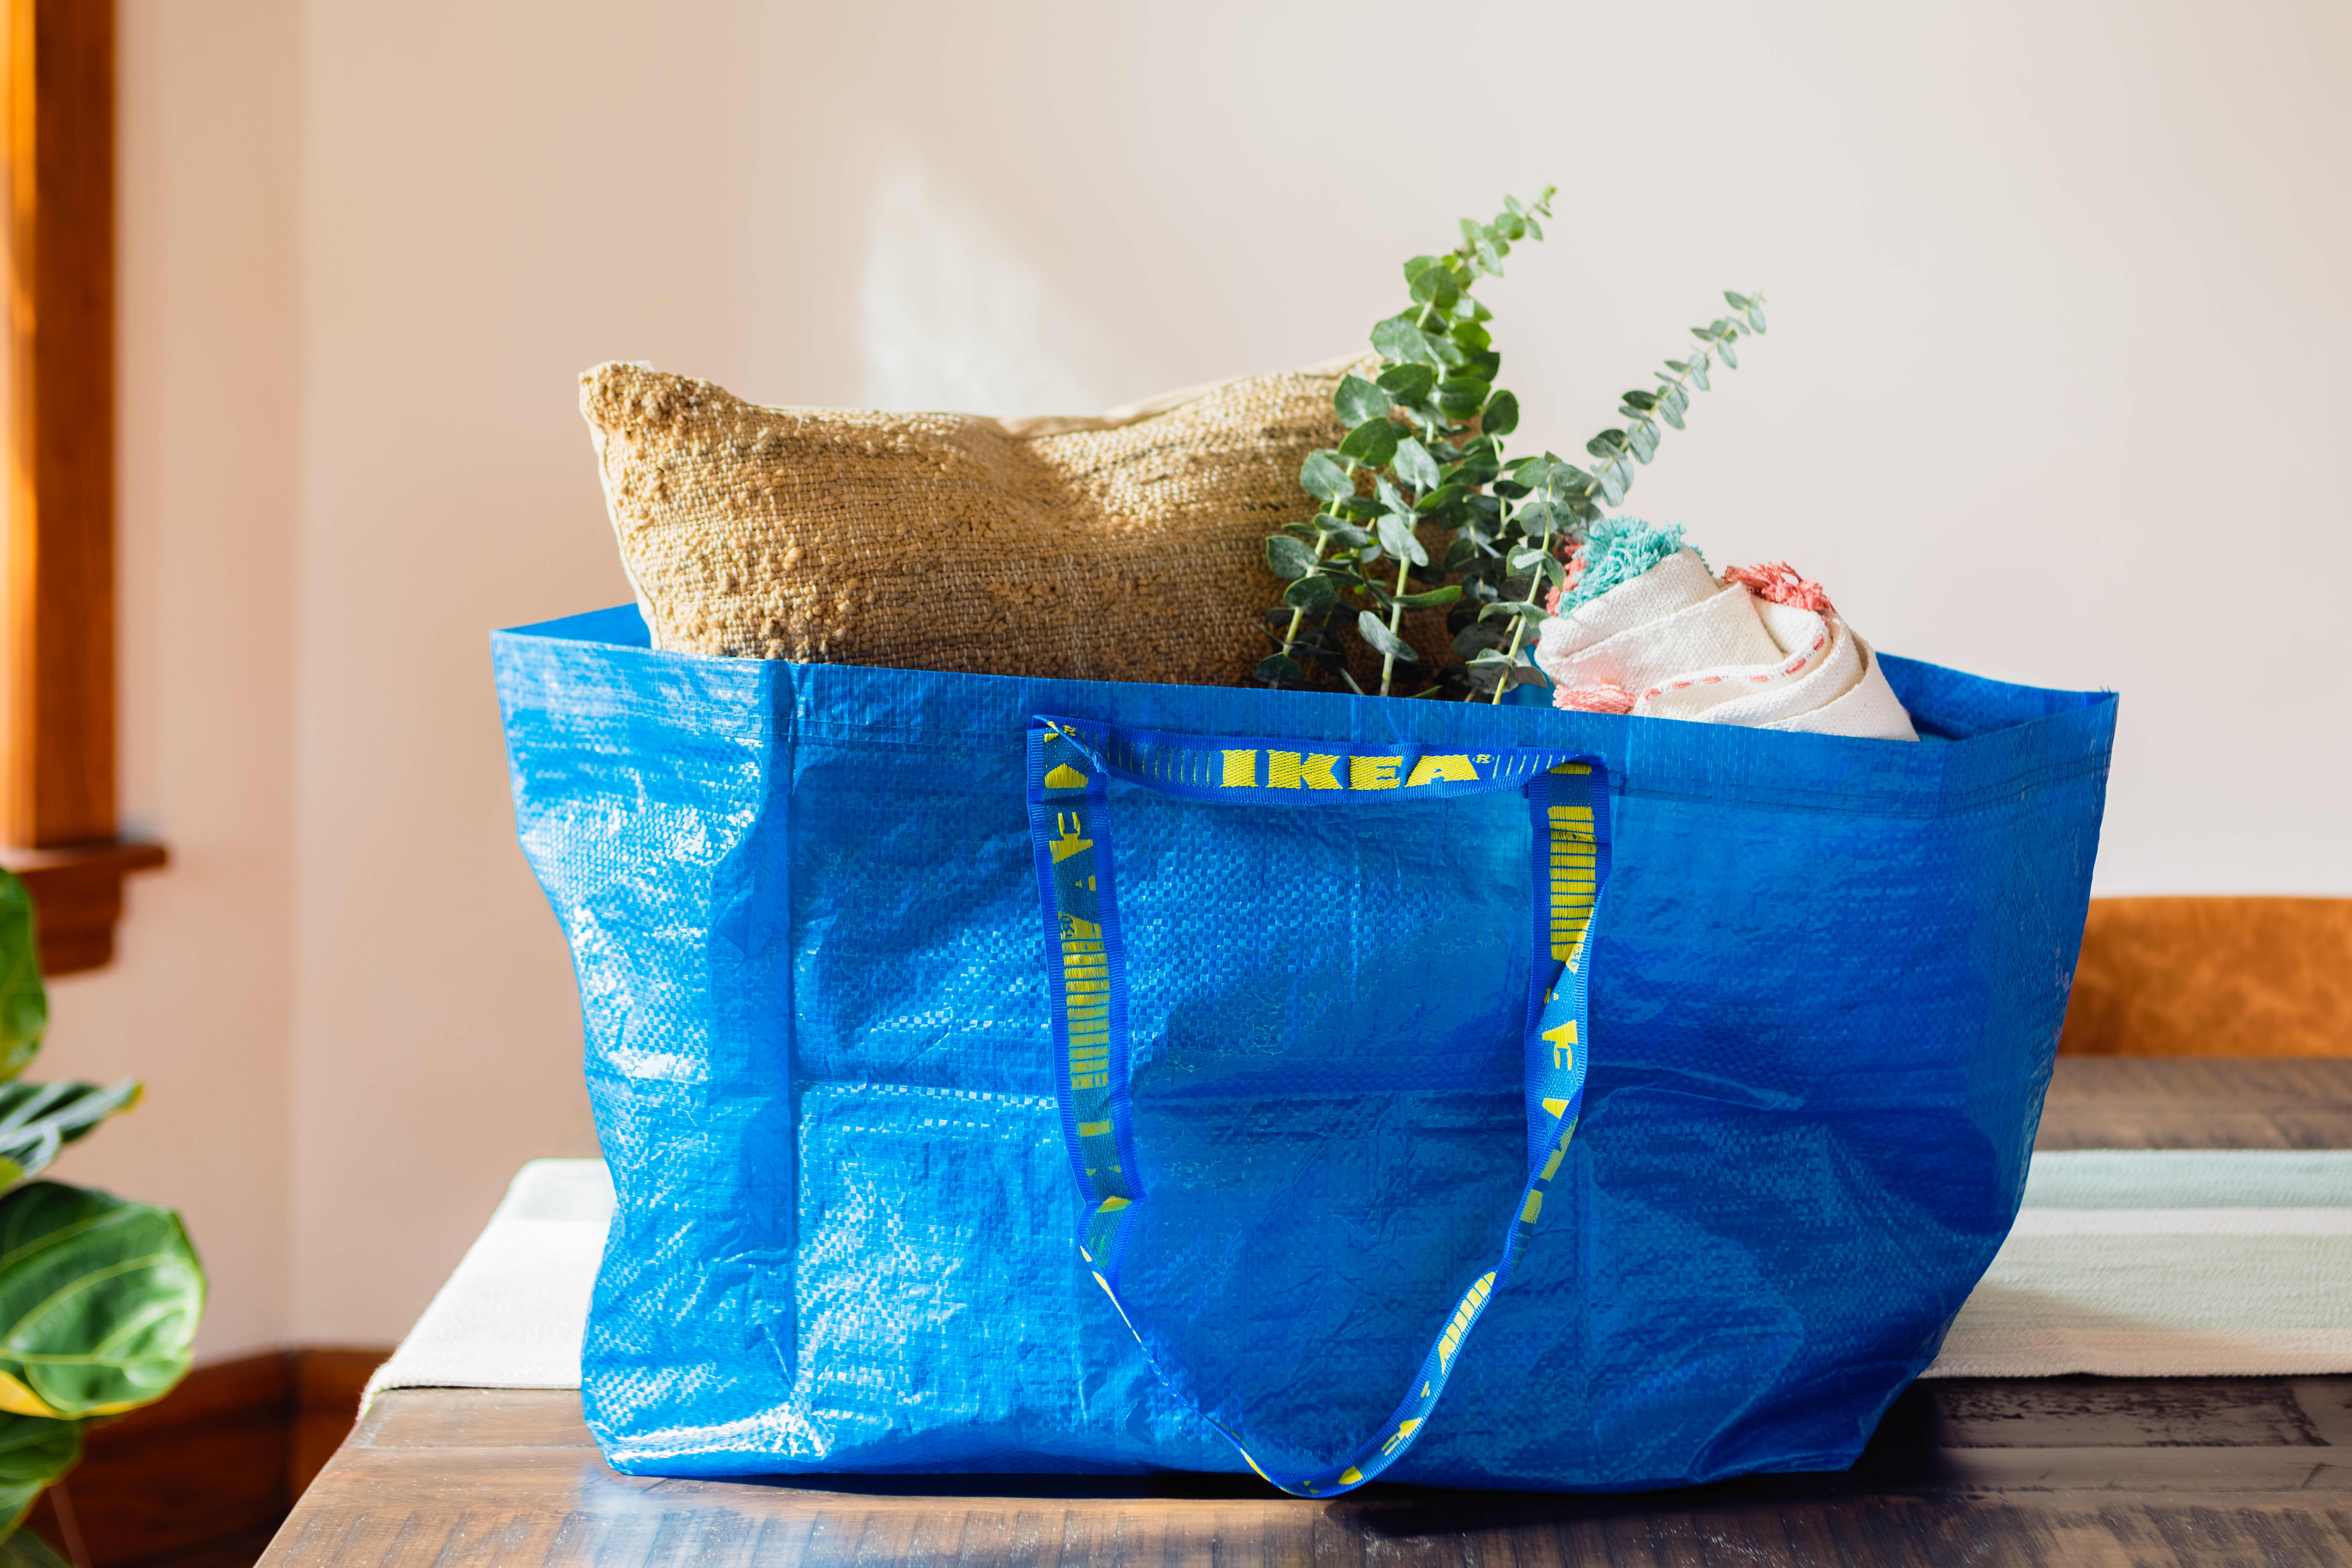 https://cdn.apartmenttherapy.info/image/upload/v1566914584/at/art/photo/2019-08/store-bags-stock/ikea-shopping-bags-20.jpg